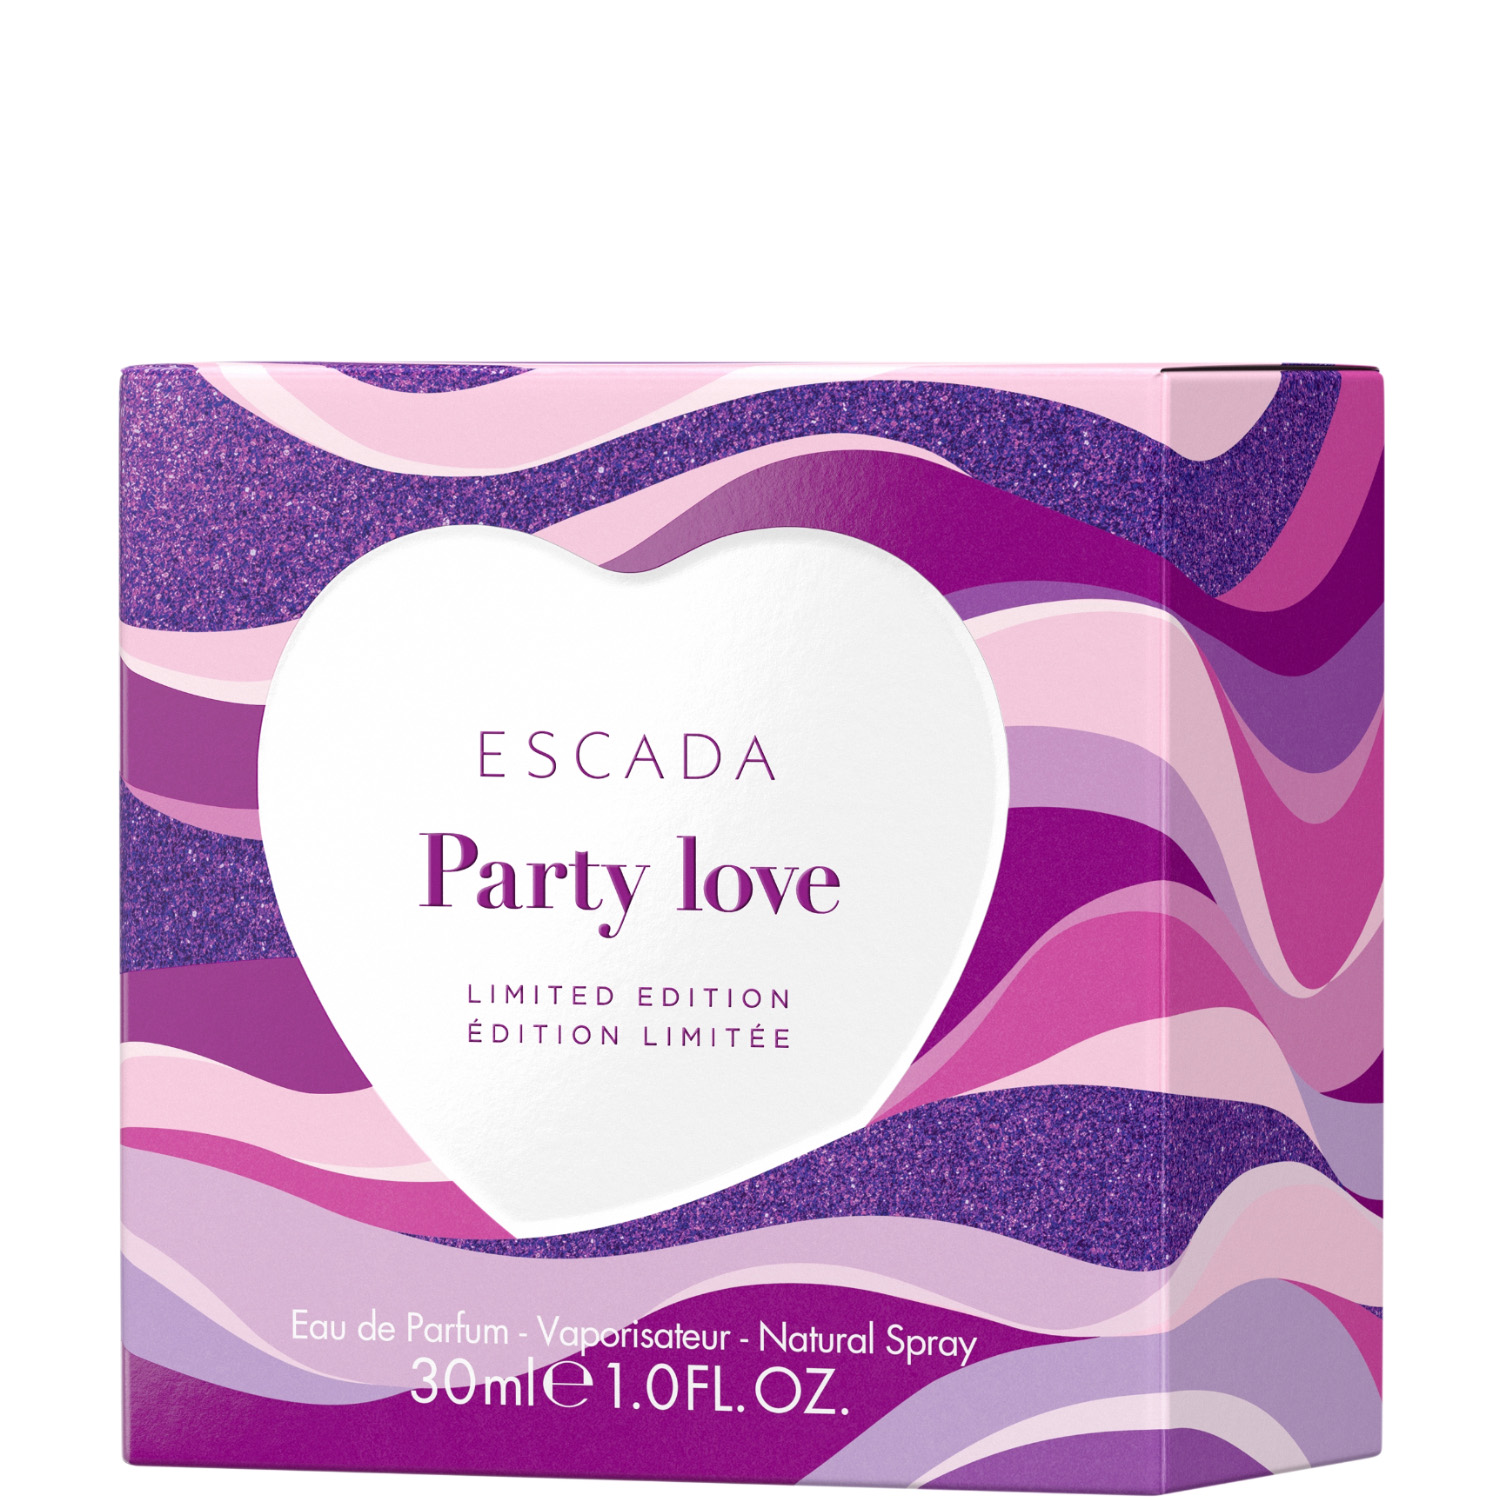 Escada Party Love Limited Edition Eau de Parfum 30ml